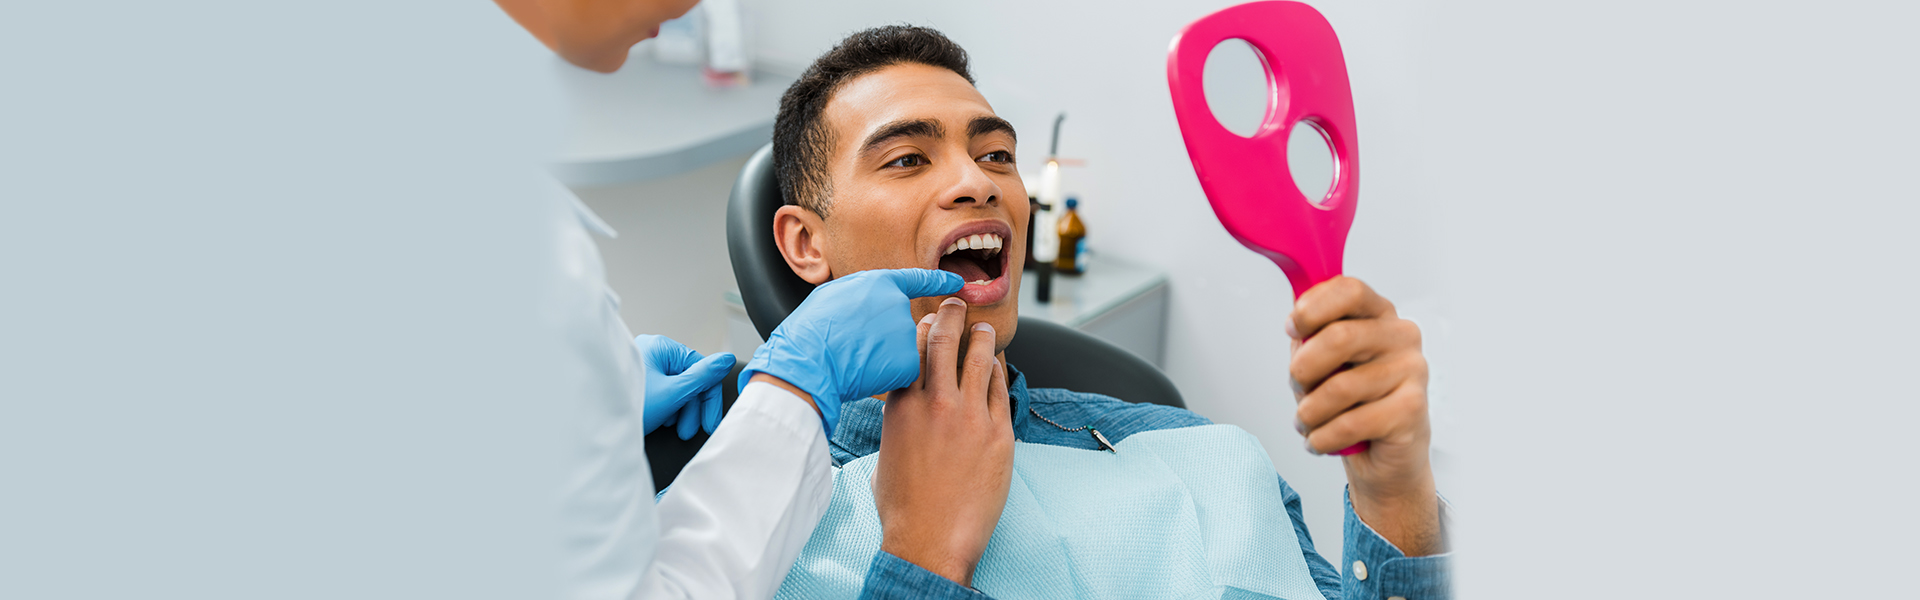 The Importance of Regular Dental Checkups: How Often Should You Go?